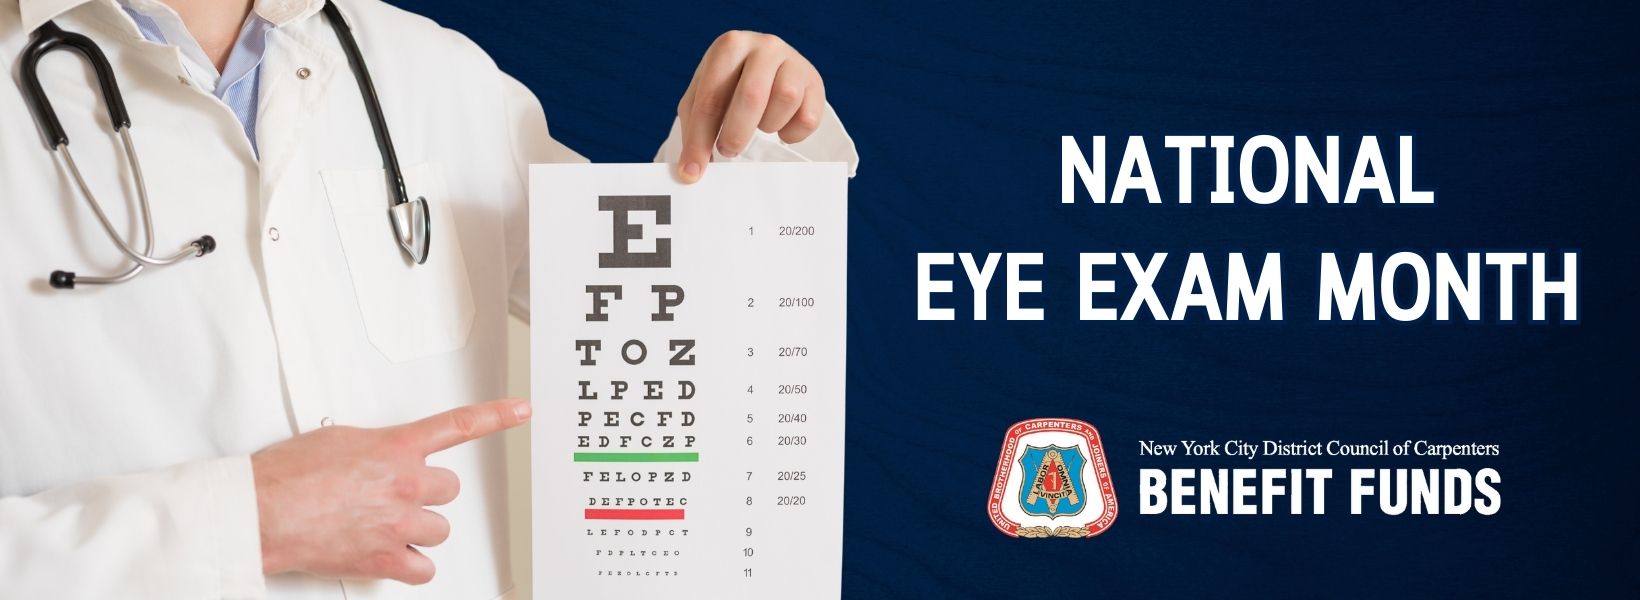 Eye Exam Article Graphic1 